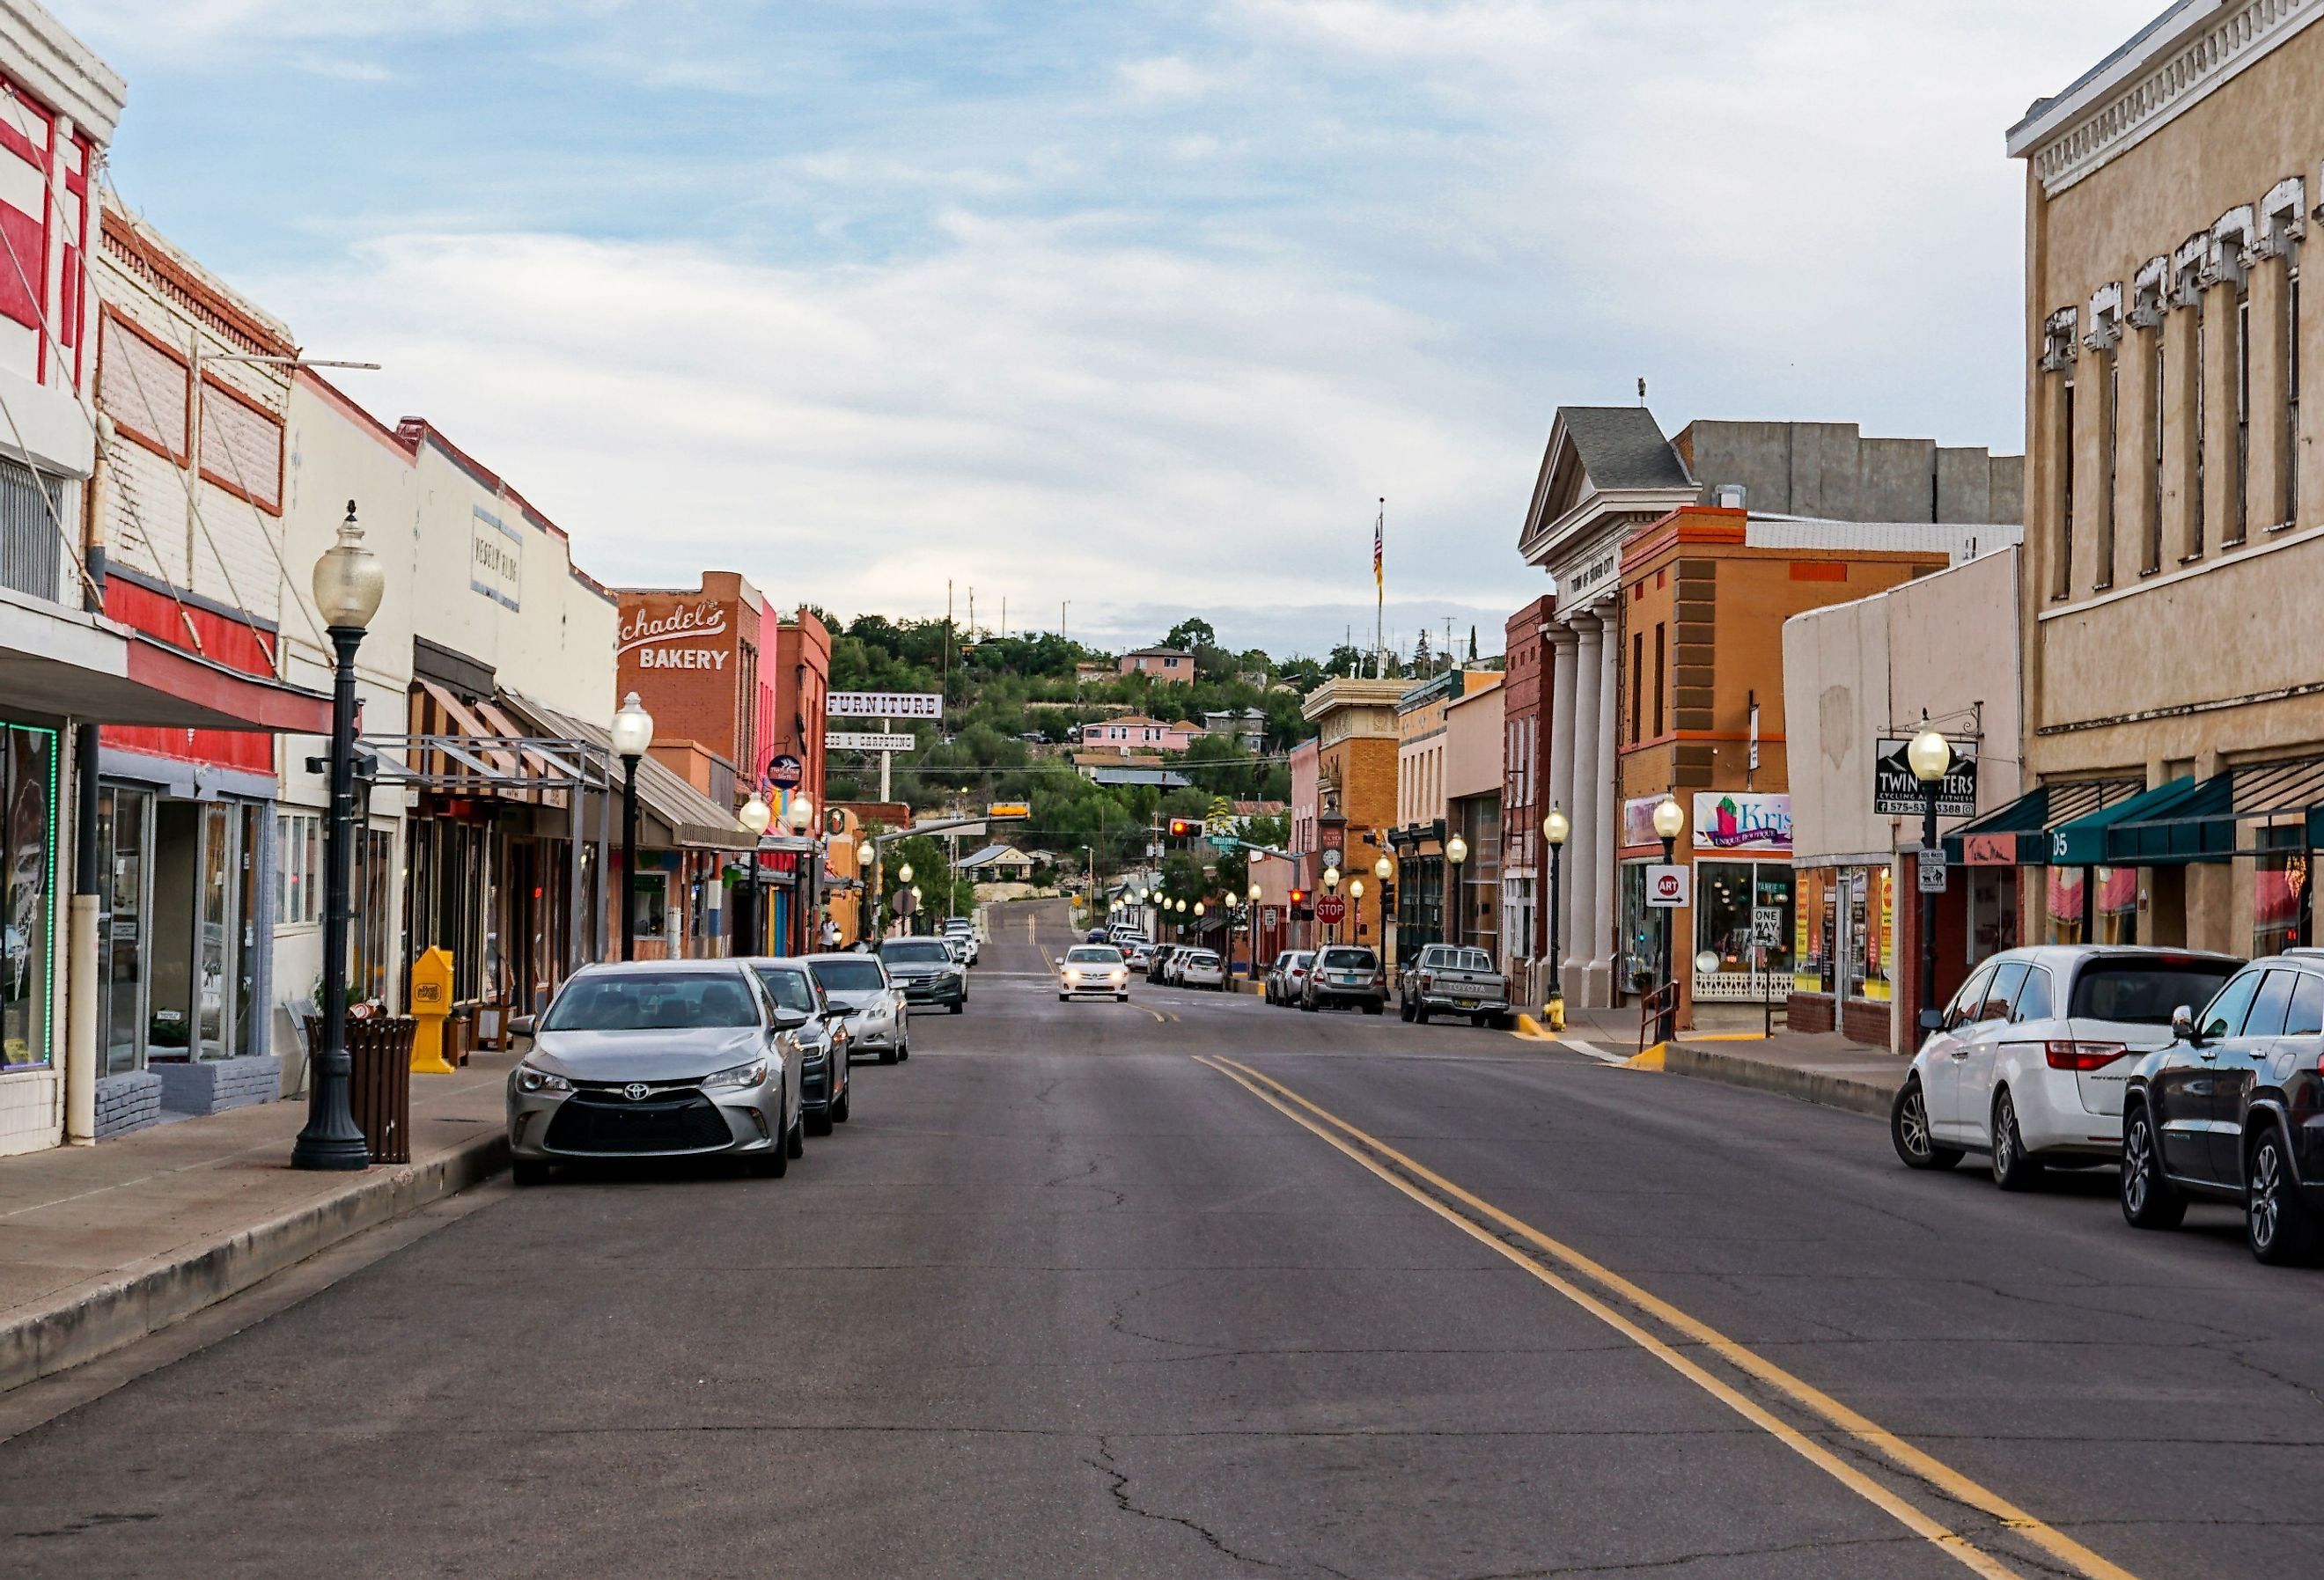 Bullard Street in downtown Silver City, New Mexico. Image credit Underawesternsky via Shutterstock